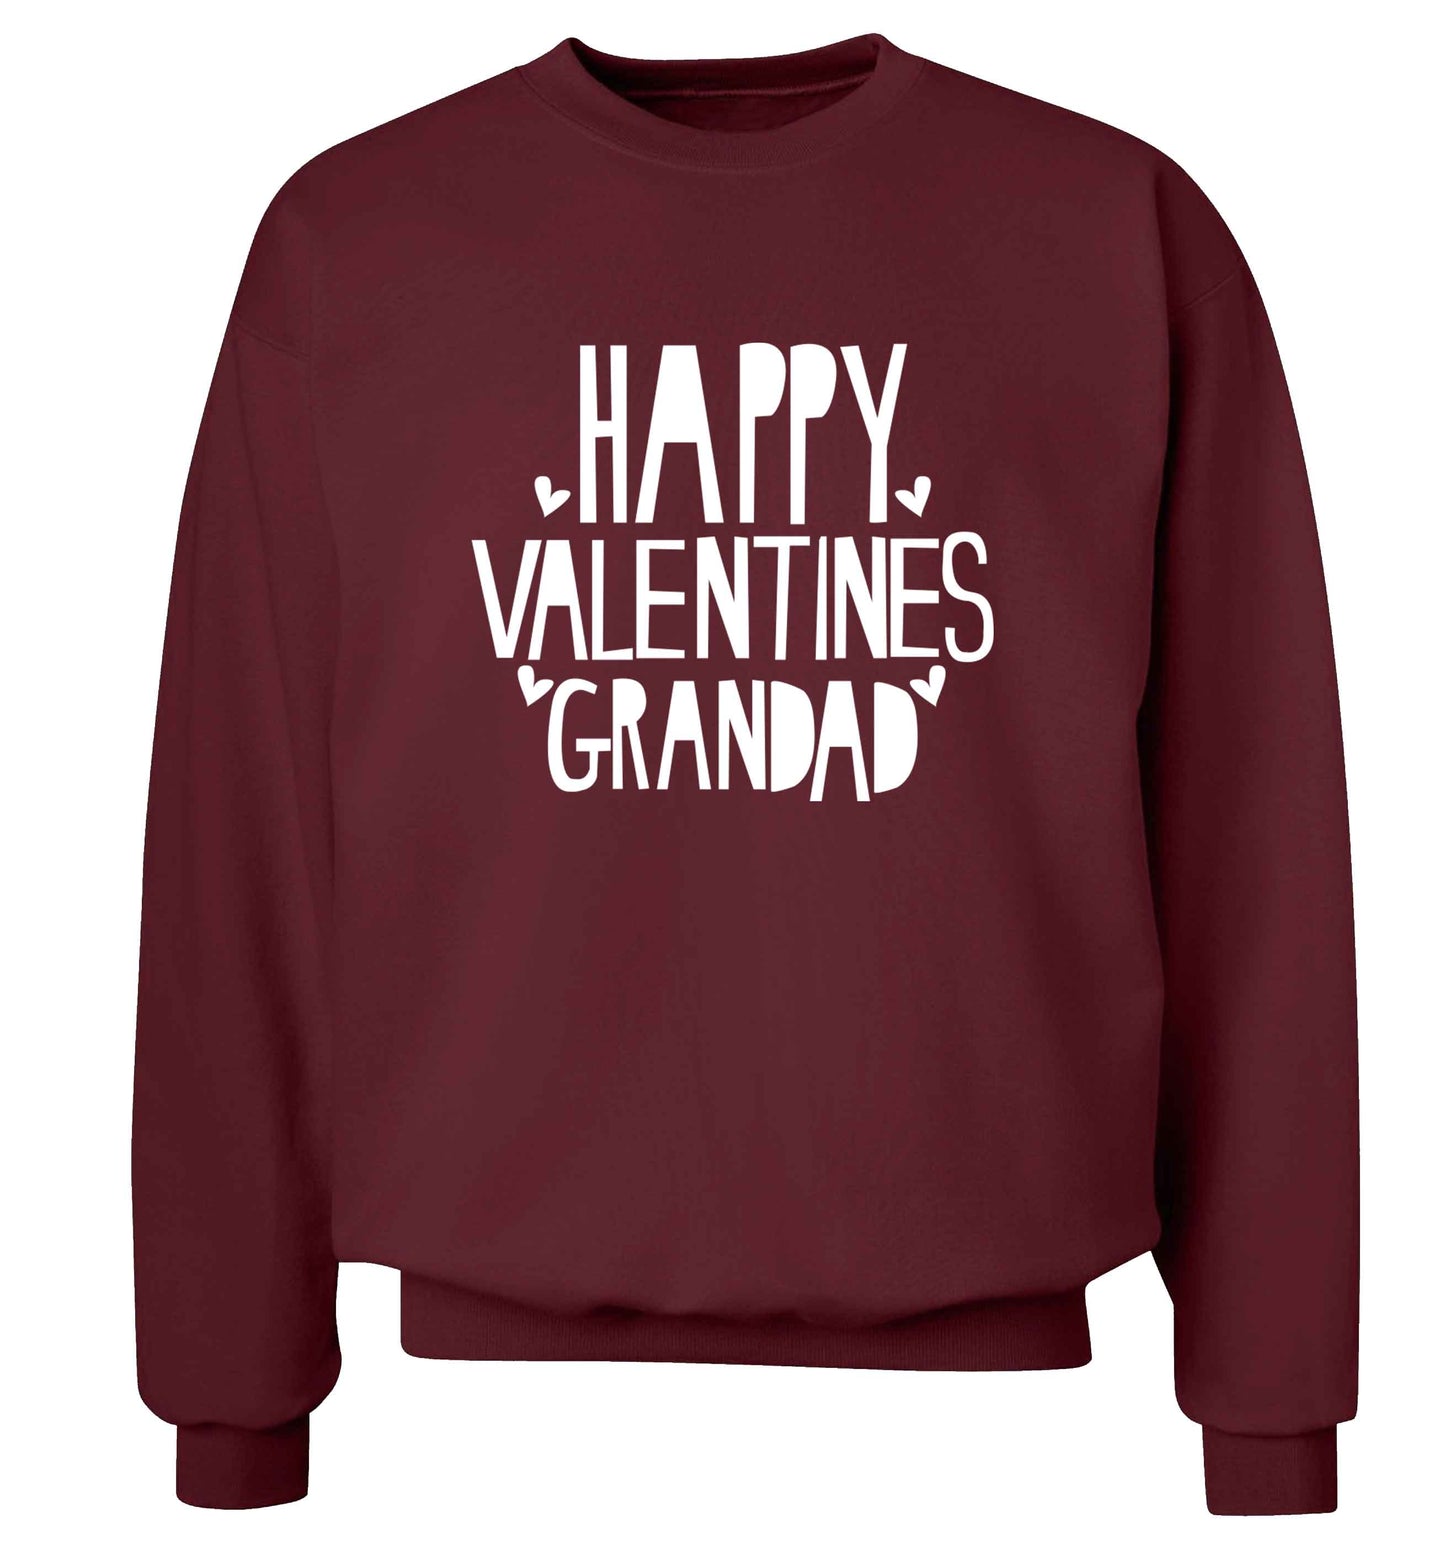 Happy valentines grandad adult's unisex maroon sweater 2XL